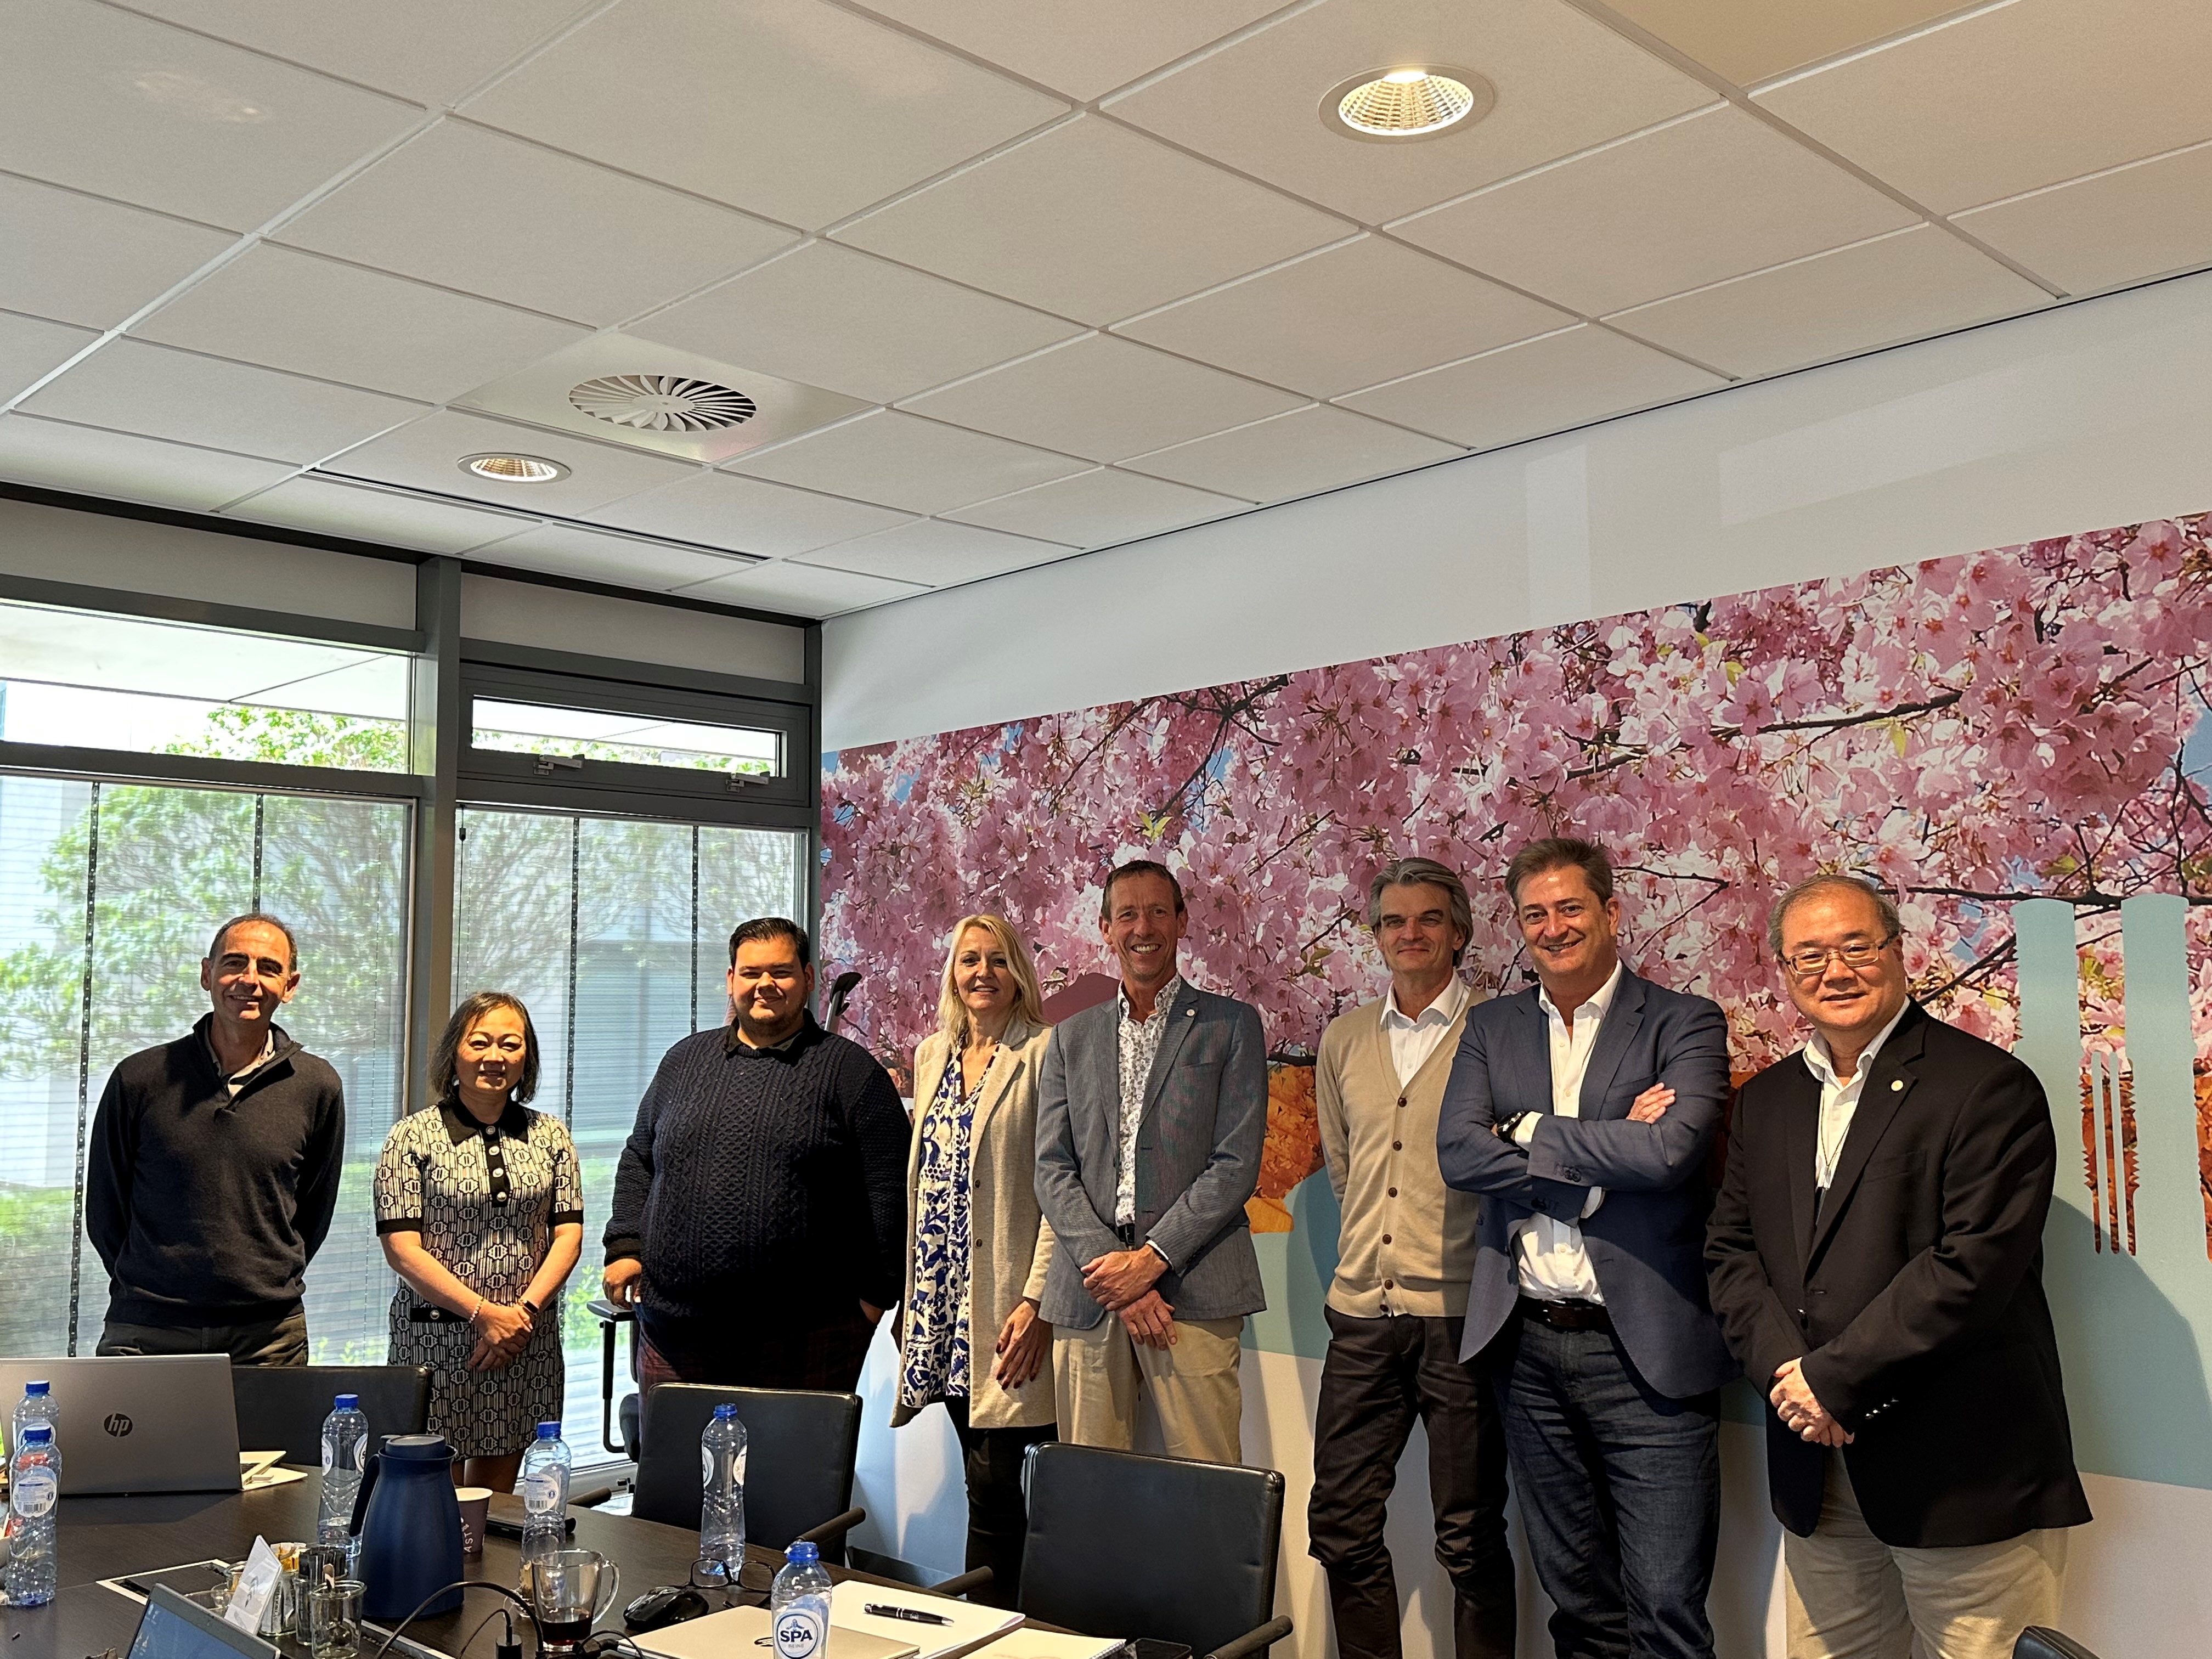 EHEDG Sub-Committee Regional Development meeting in Amsterdam